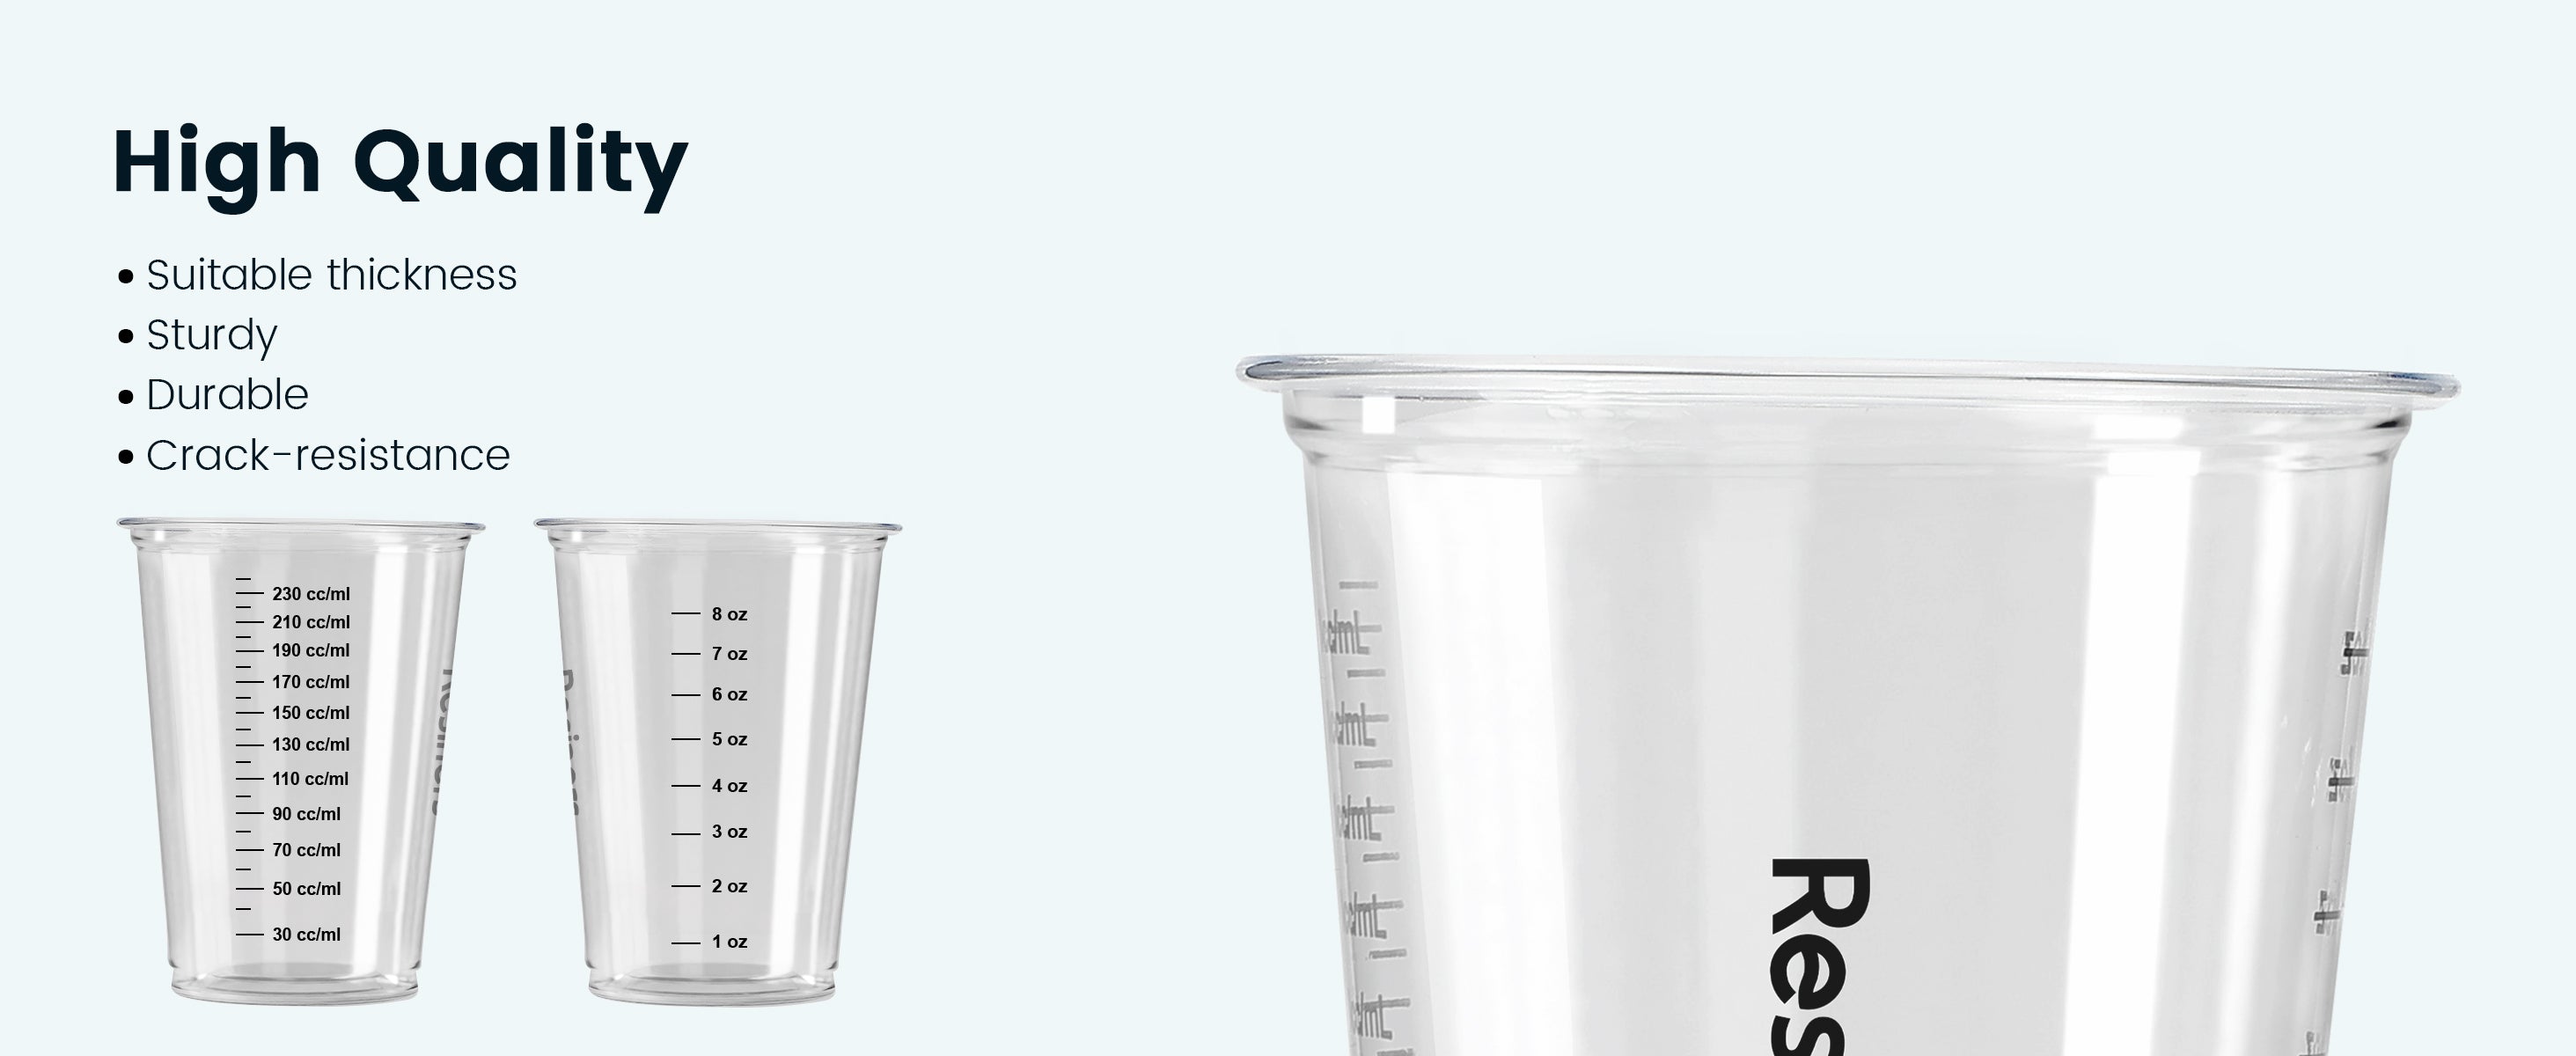 Measuring Cup / Beaker - 3 oz Plastic